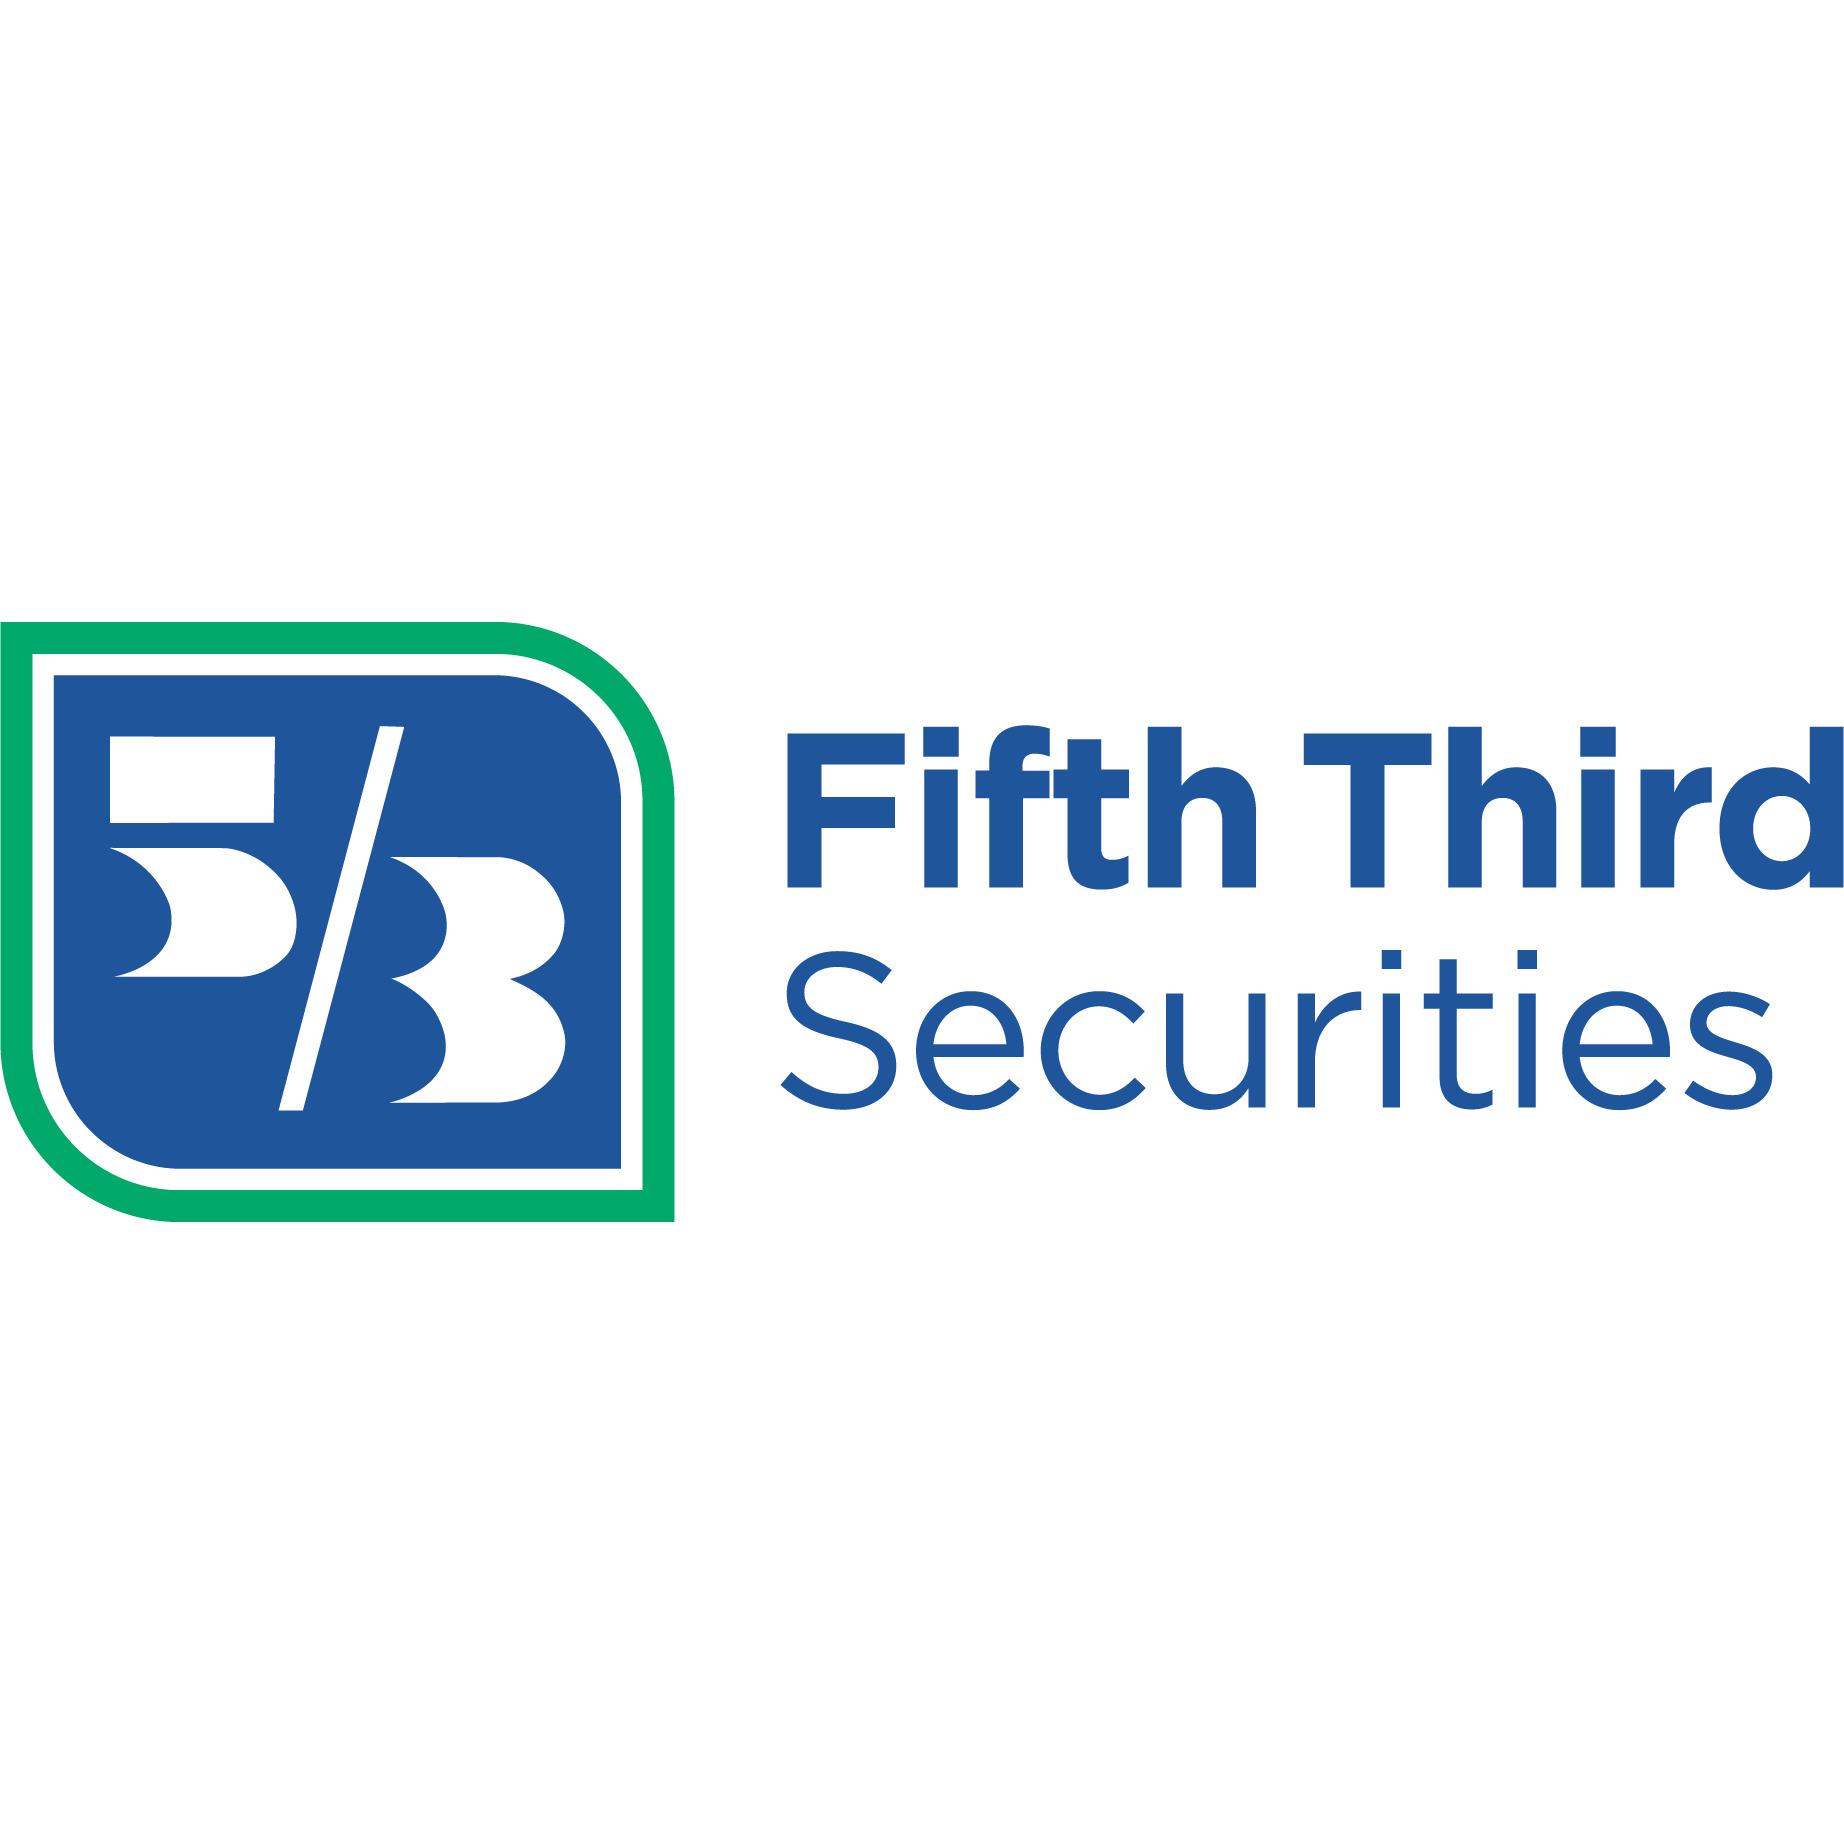 Fifth Third Securities - Gerald Gilbertson